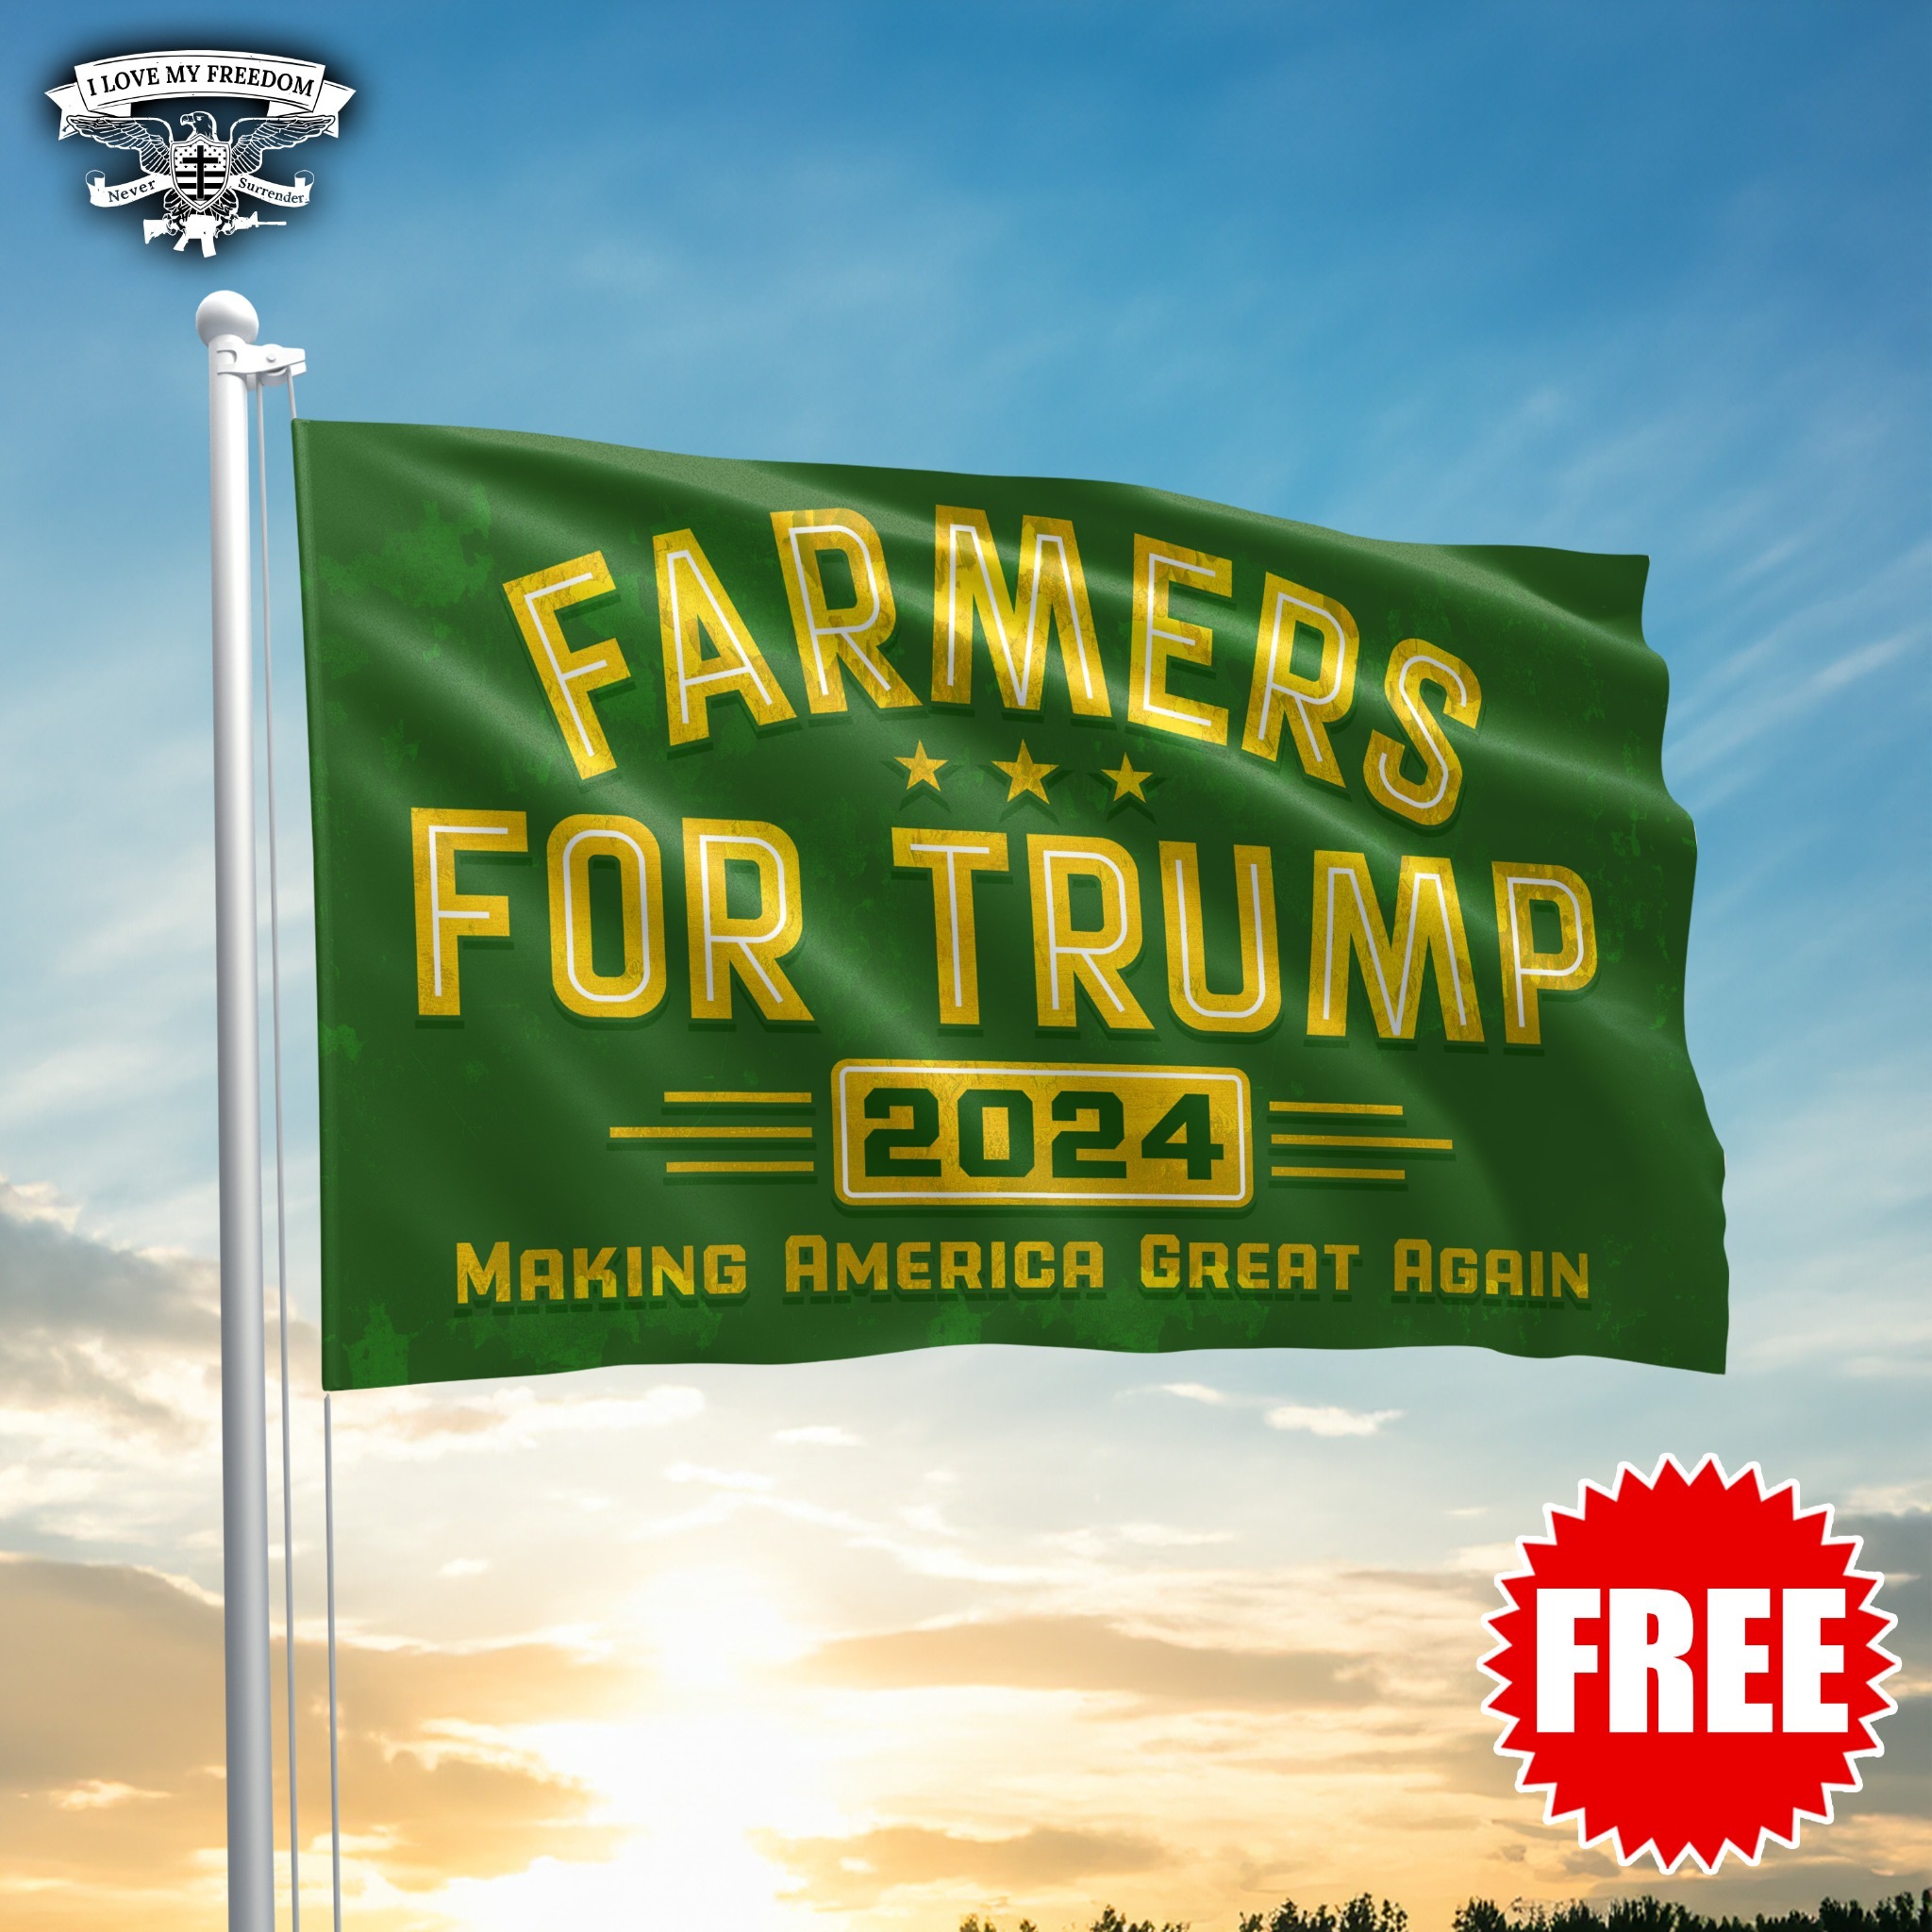 Farmers for Trump 2024 make America great again flag